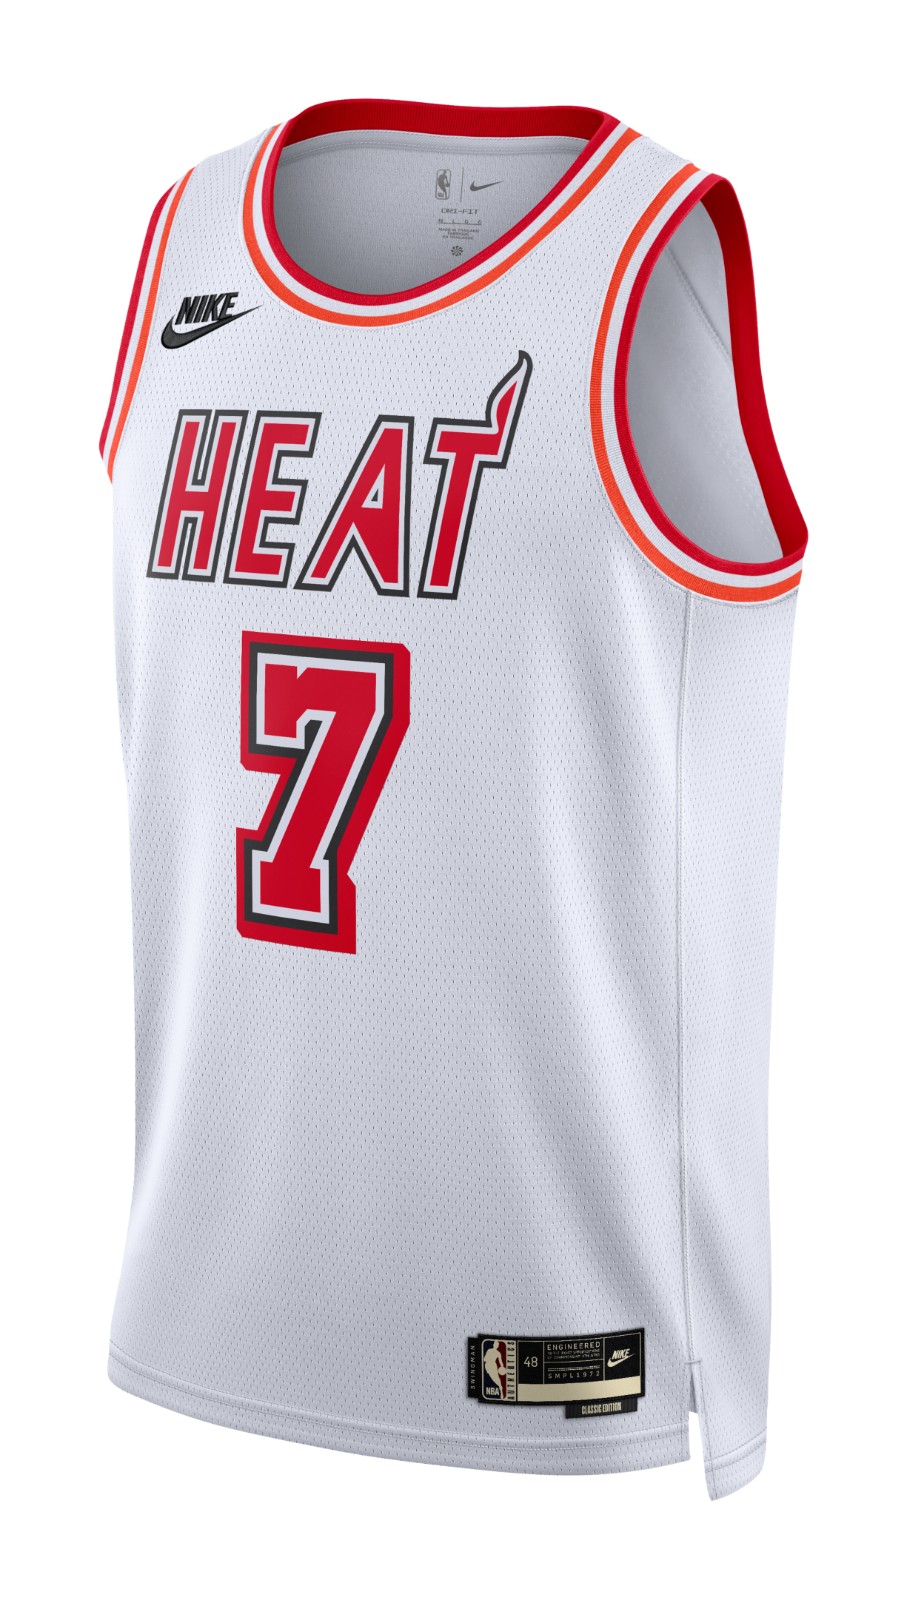 Miami Heat announce return of retro jerseys as Classic Jerseys for